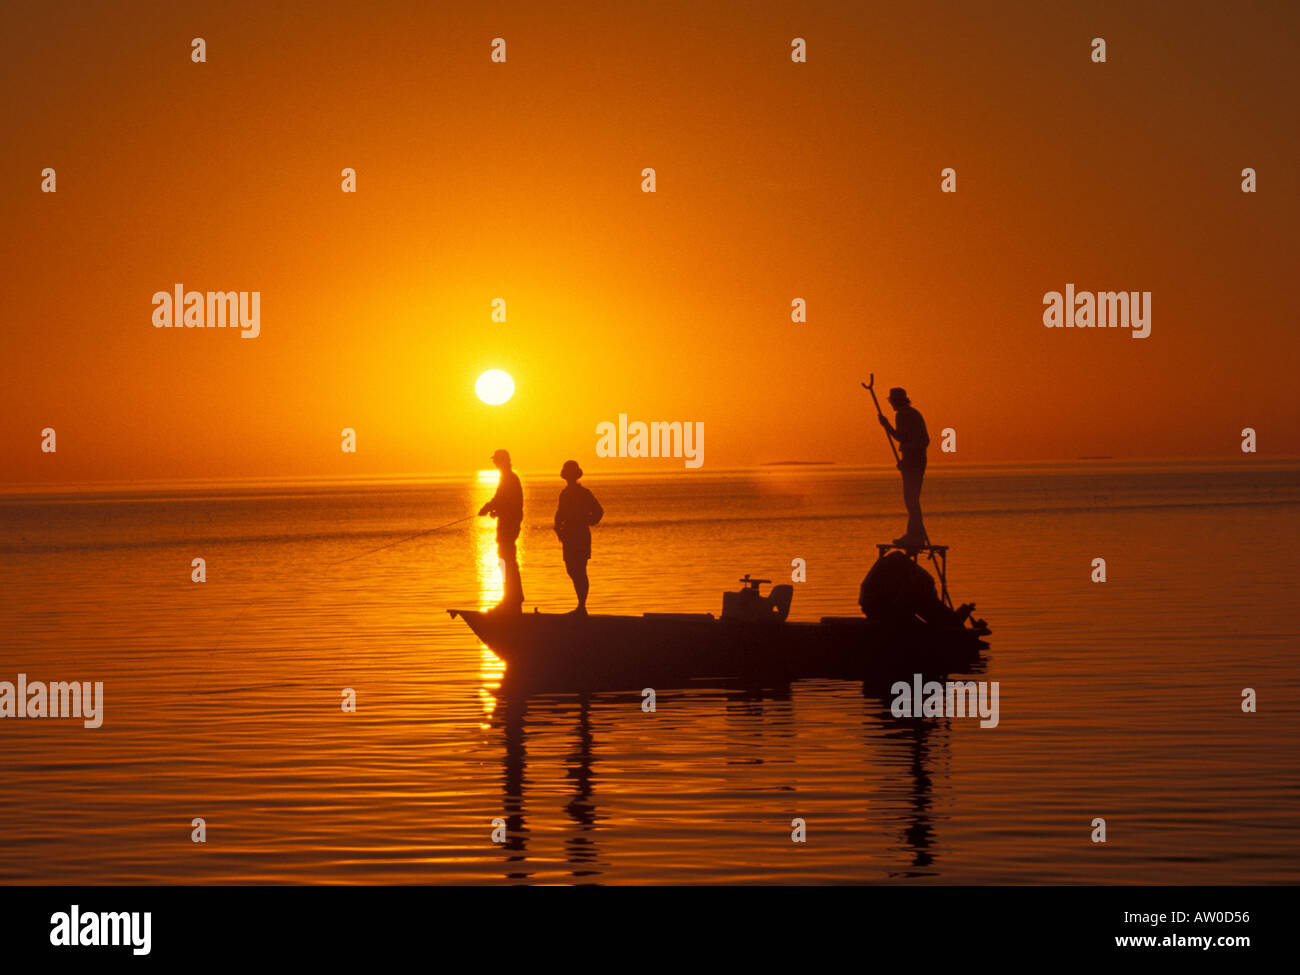 Florida Keys coucher du soleil orange pêche au harpon appartements silhouette ciel boat guide pole poling islamorada island Banque D'Images